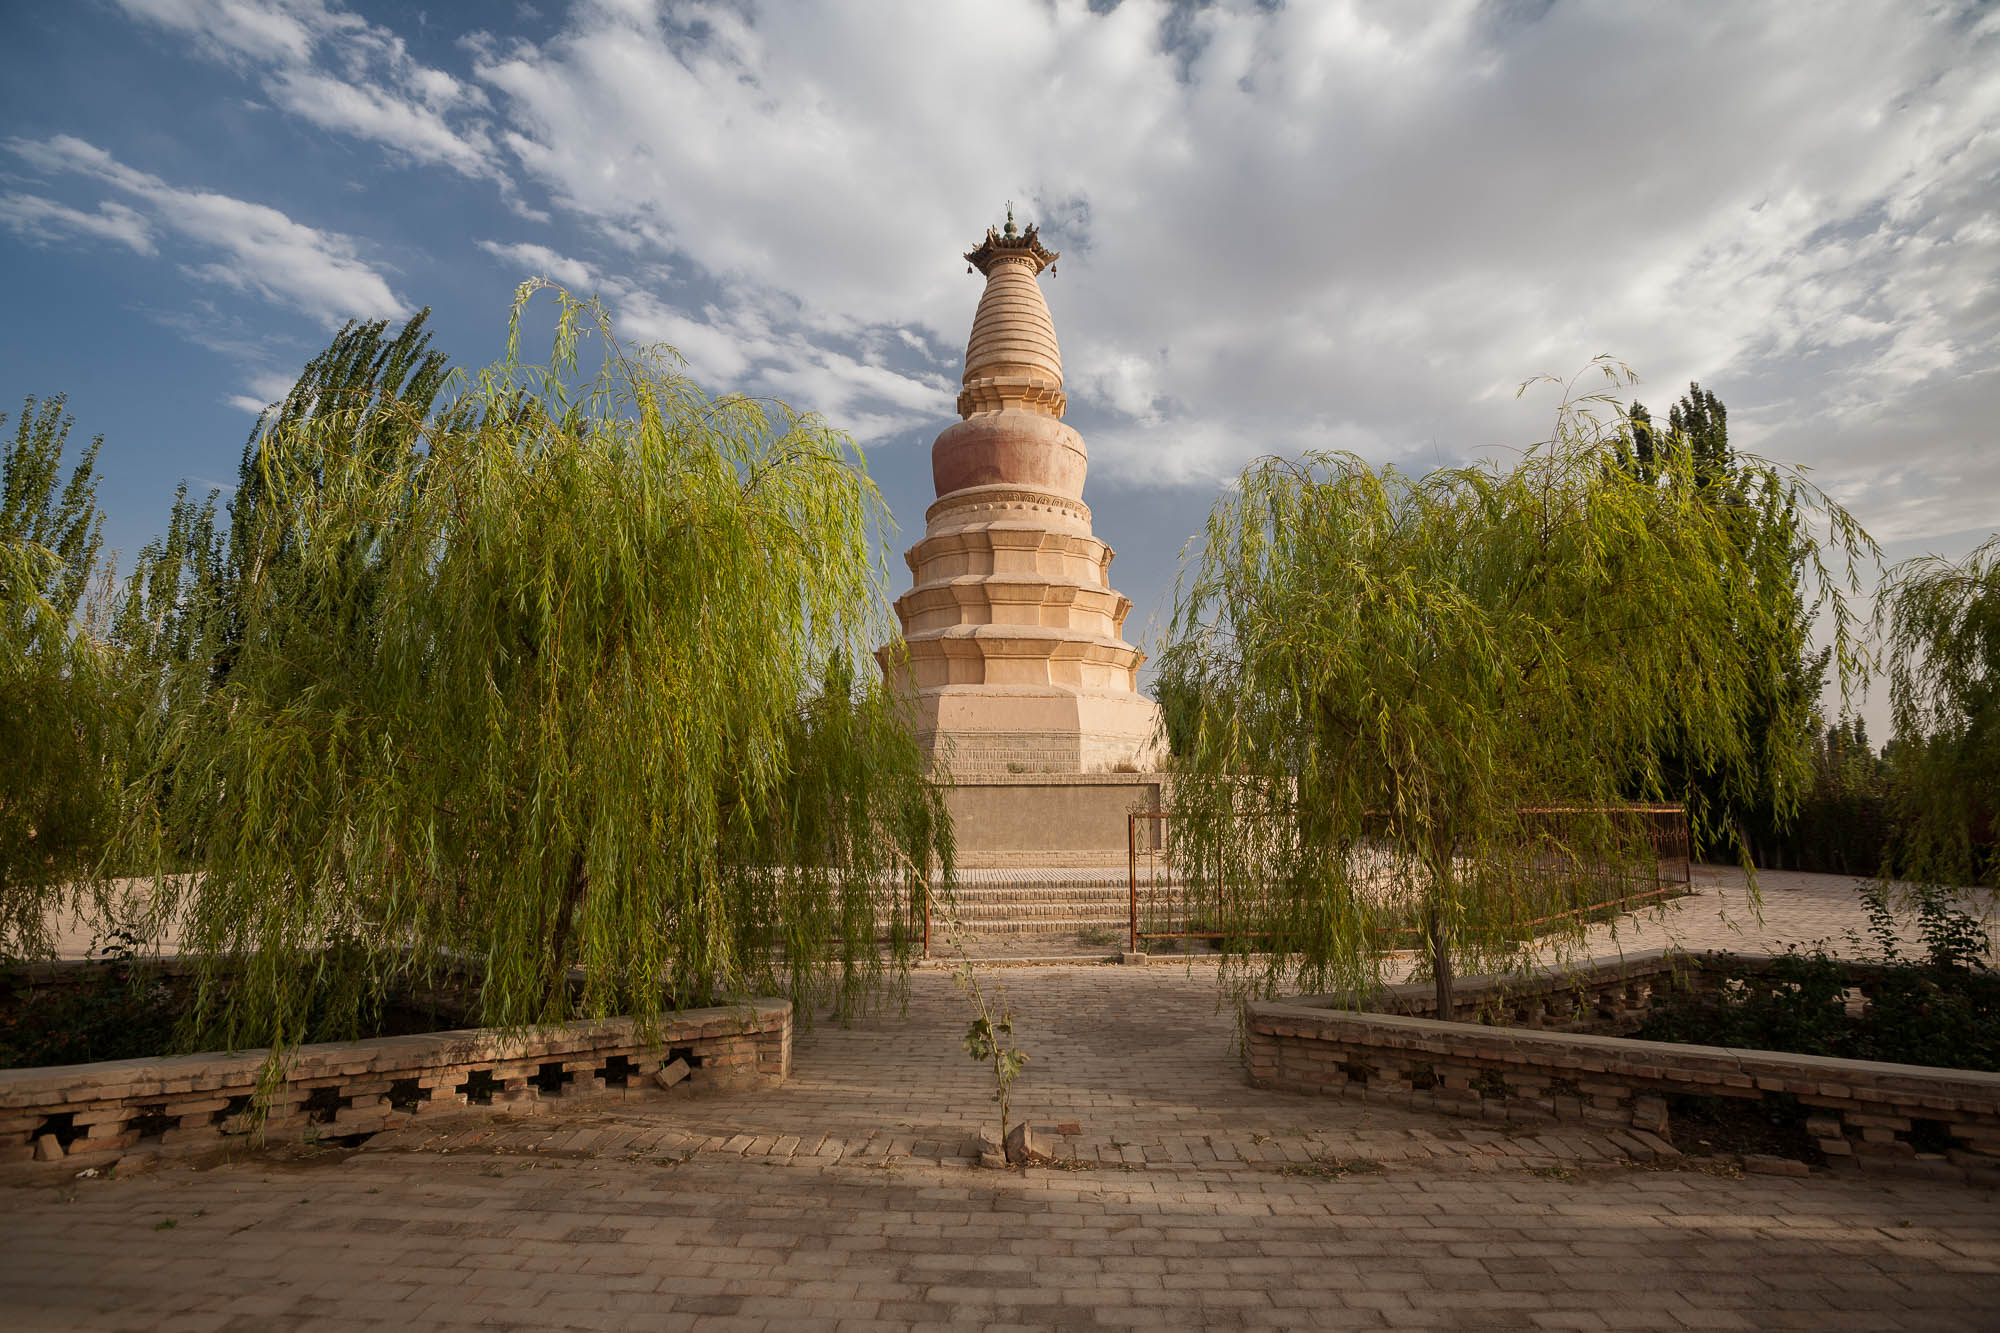 White Horse Pagoda